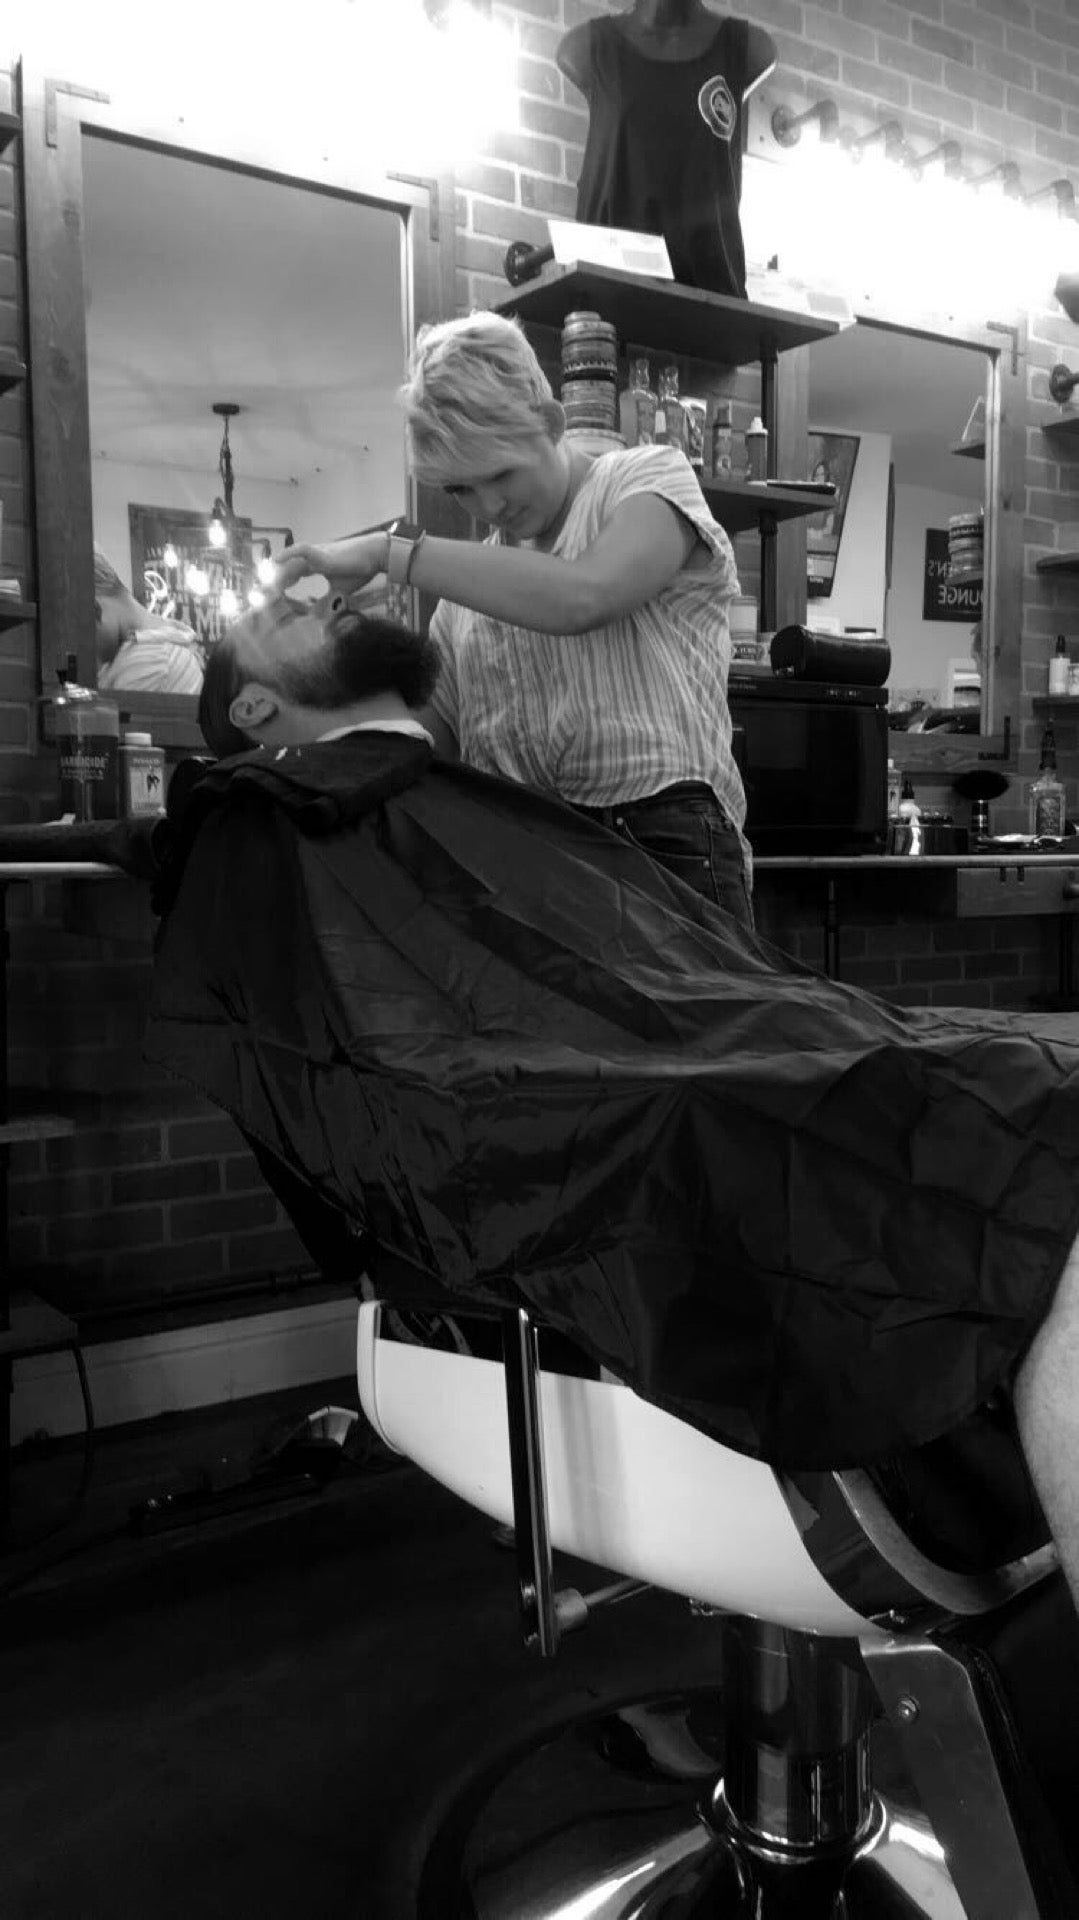 Livermore Barber Shop